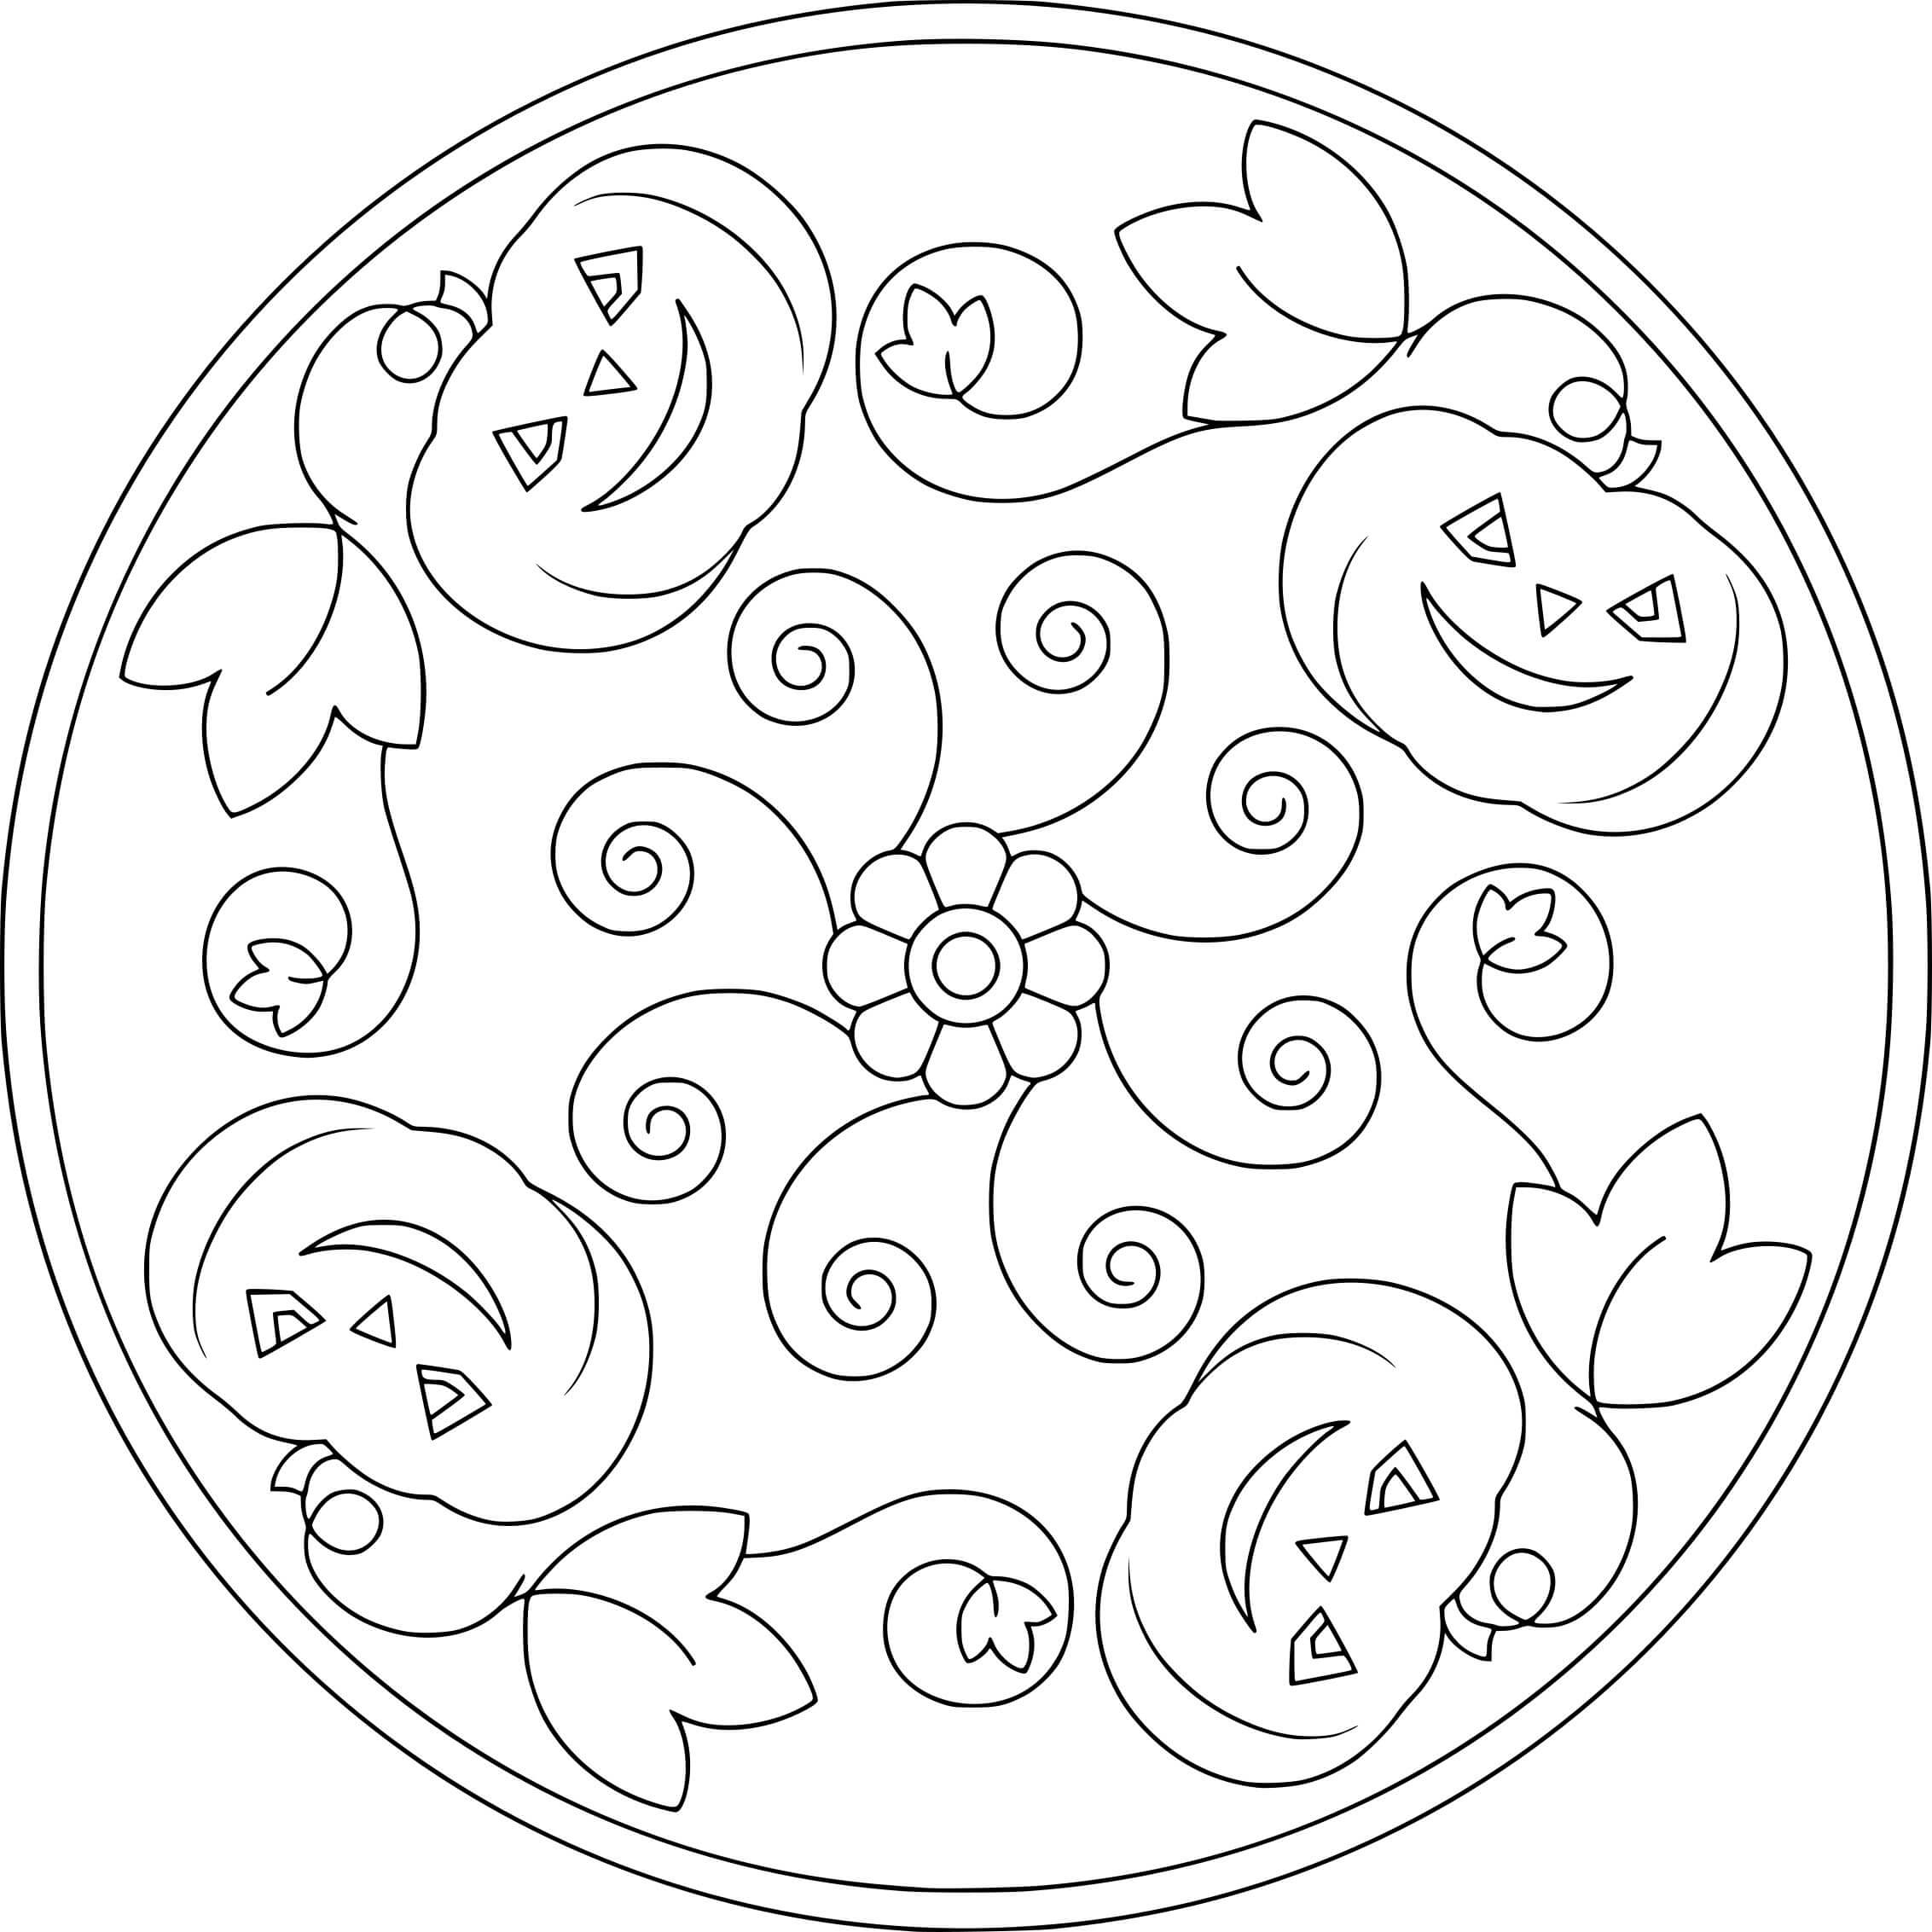 Mandala Halloween Coloring Page - Sheet 6 Mandalas